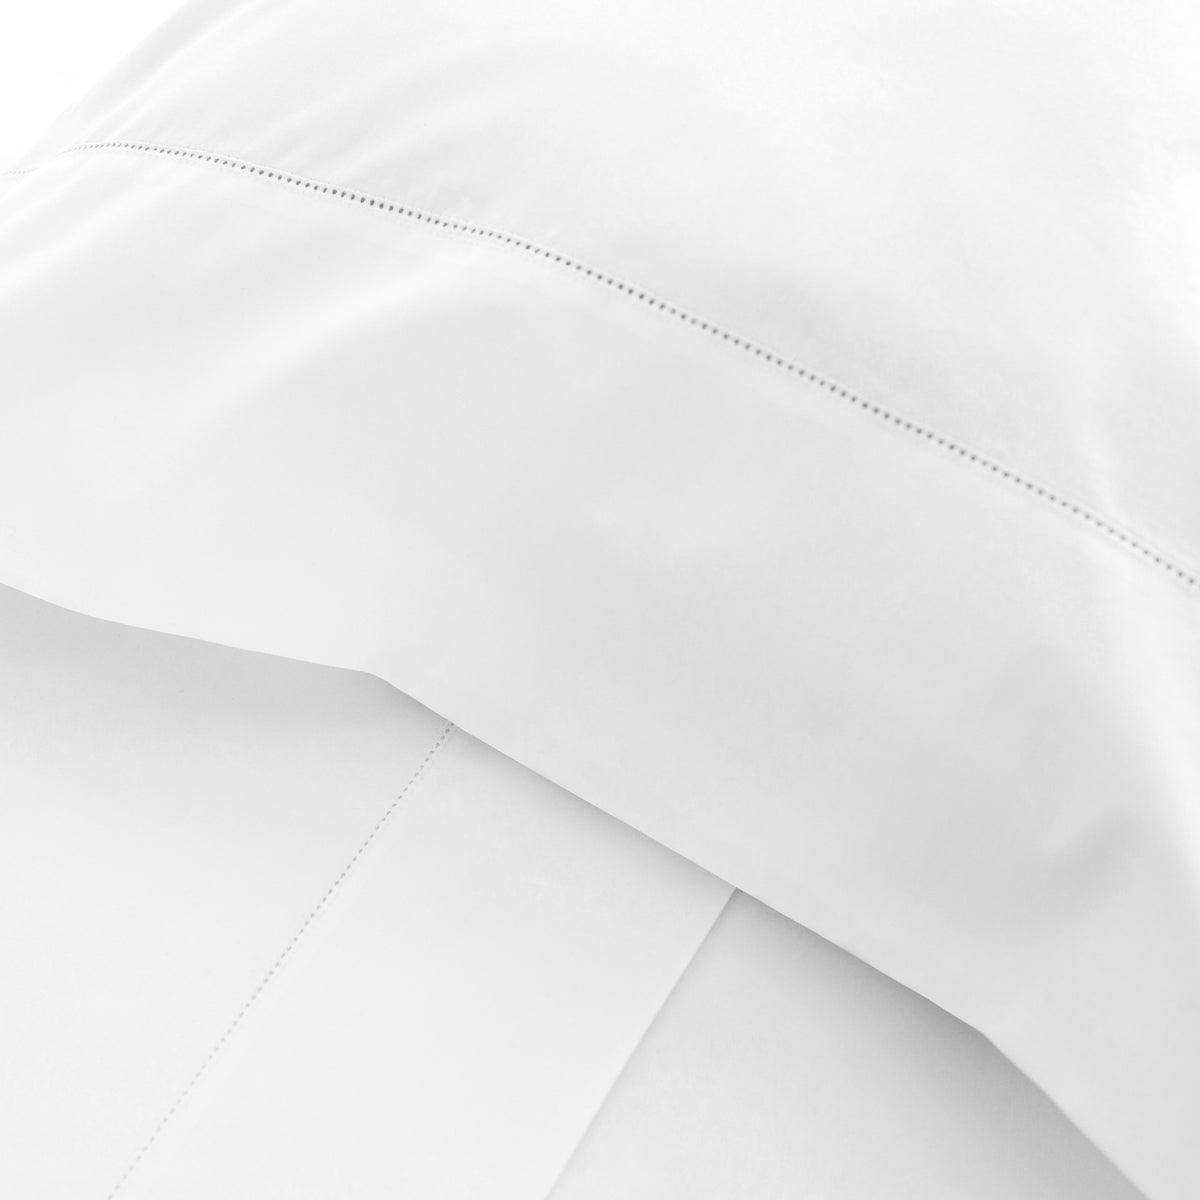 Detail Image of Signoria Tuscan Dreams Pillowcases and Flat Sheet